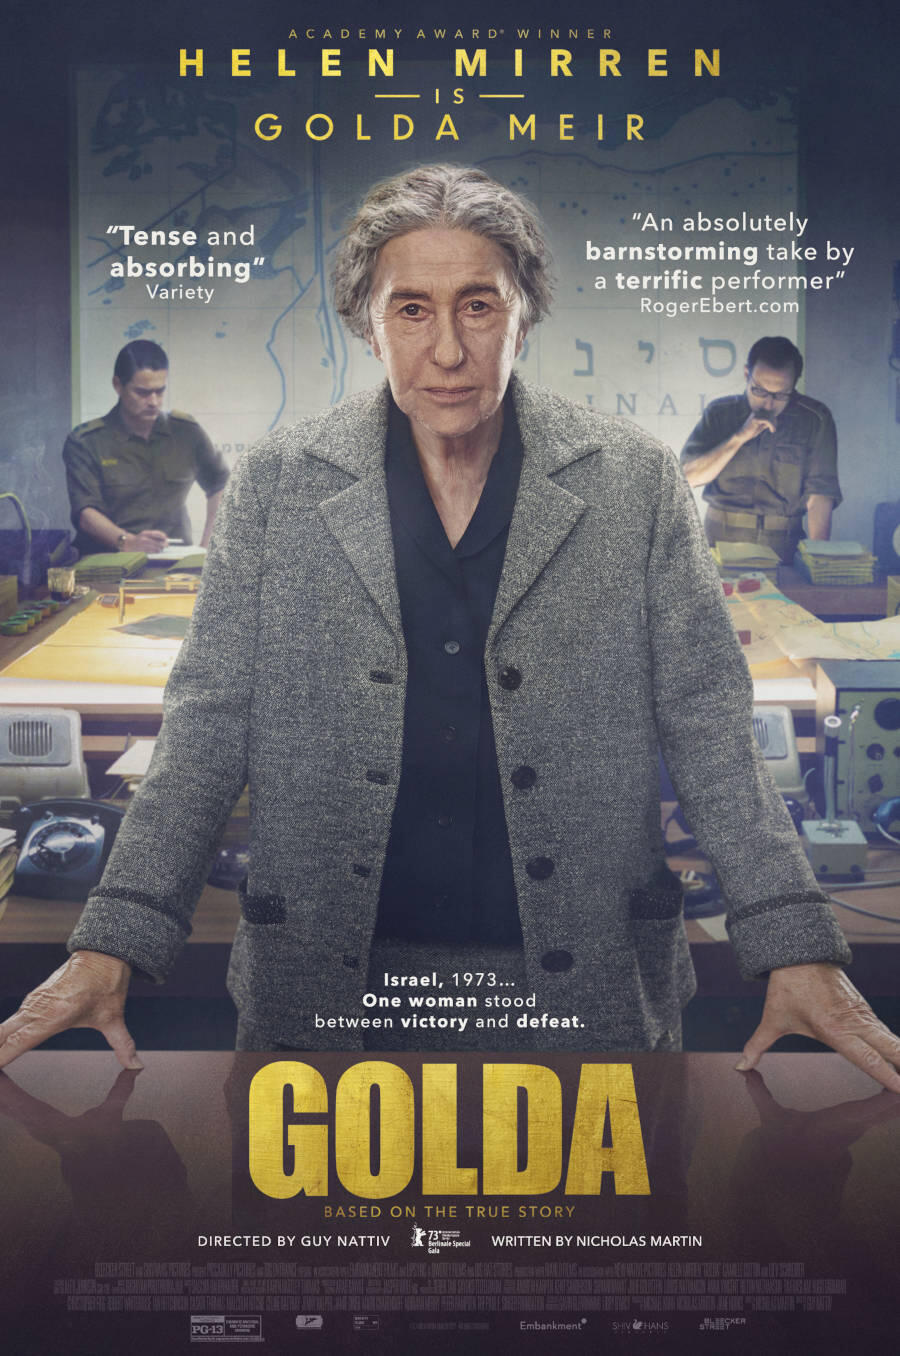 Attend a pre-release screening of Golda next week - Smile Politely